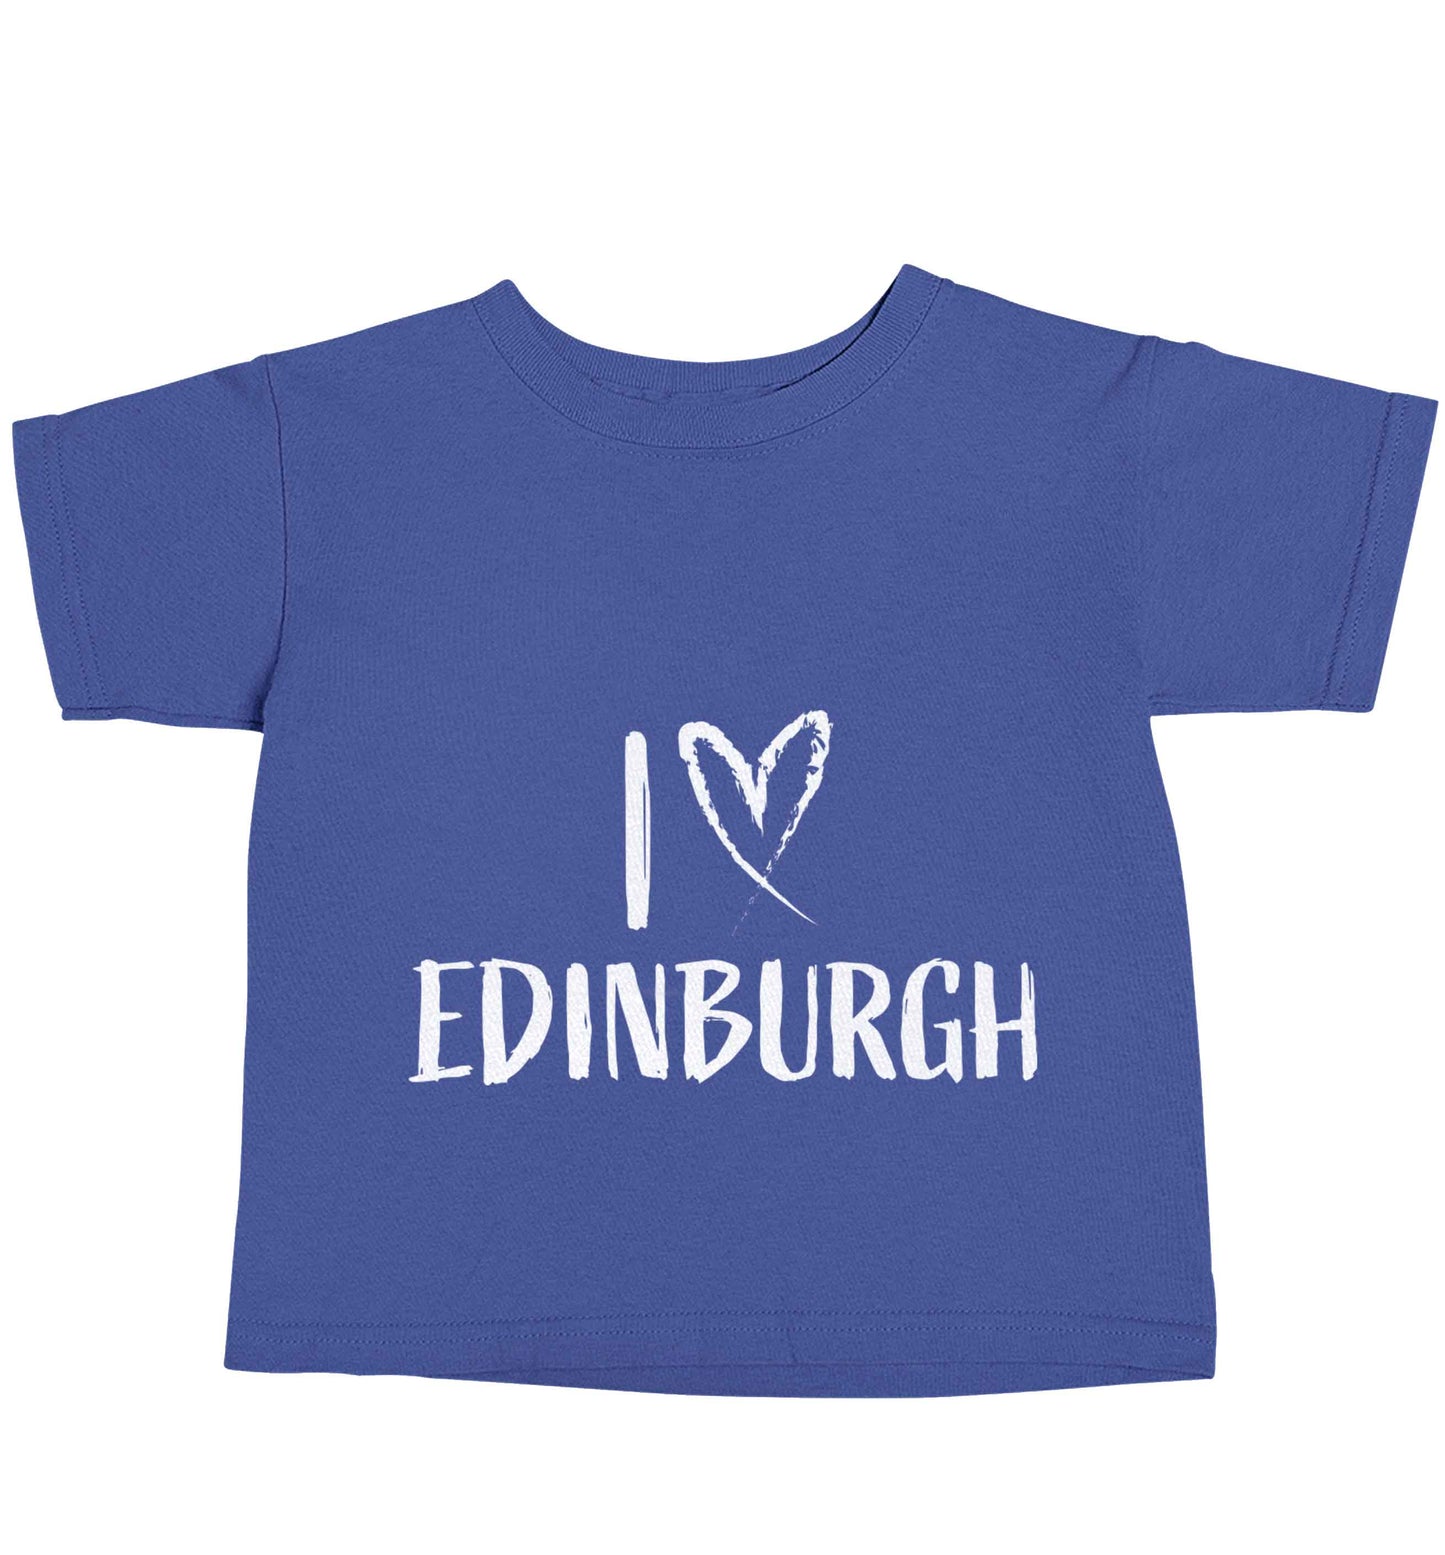 I love Edinburgh blue baby toddler Tshirt 2 Years